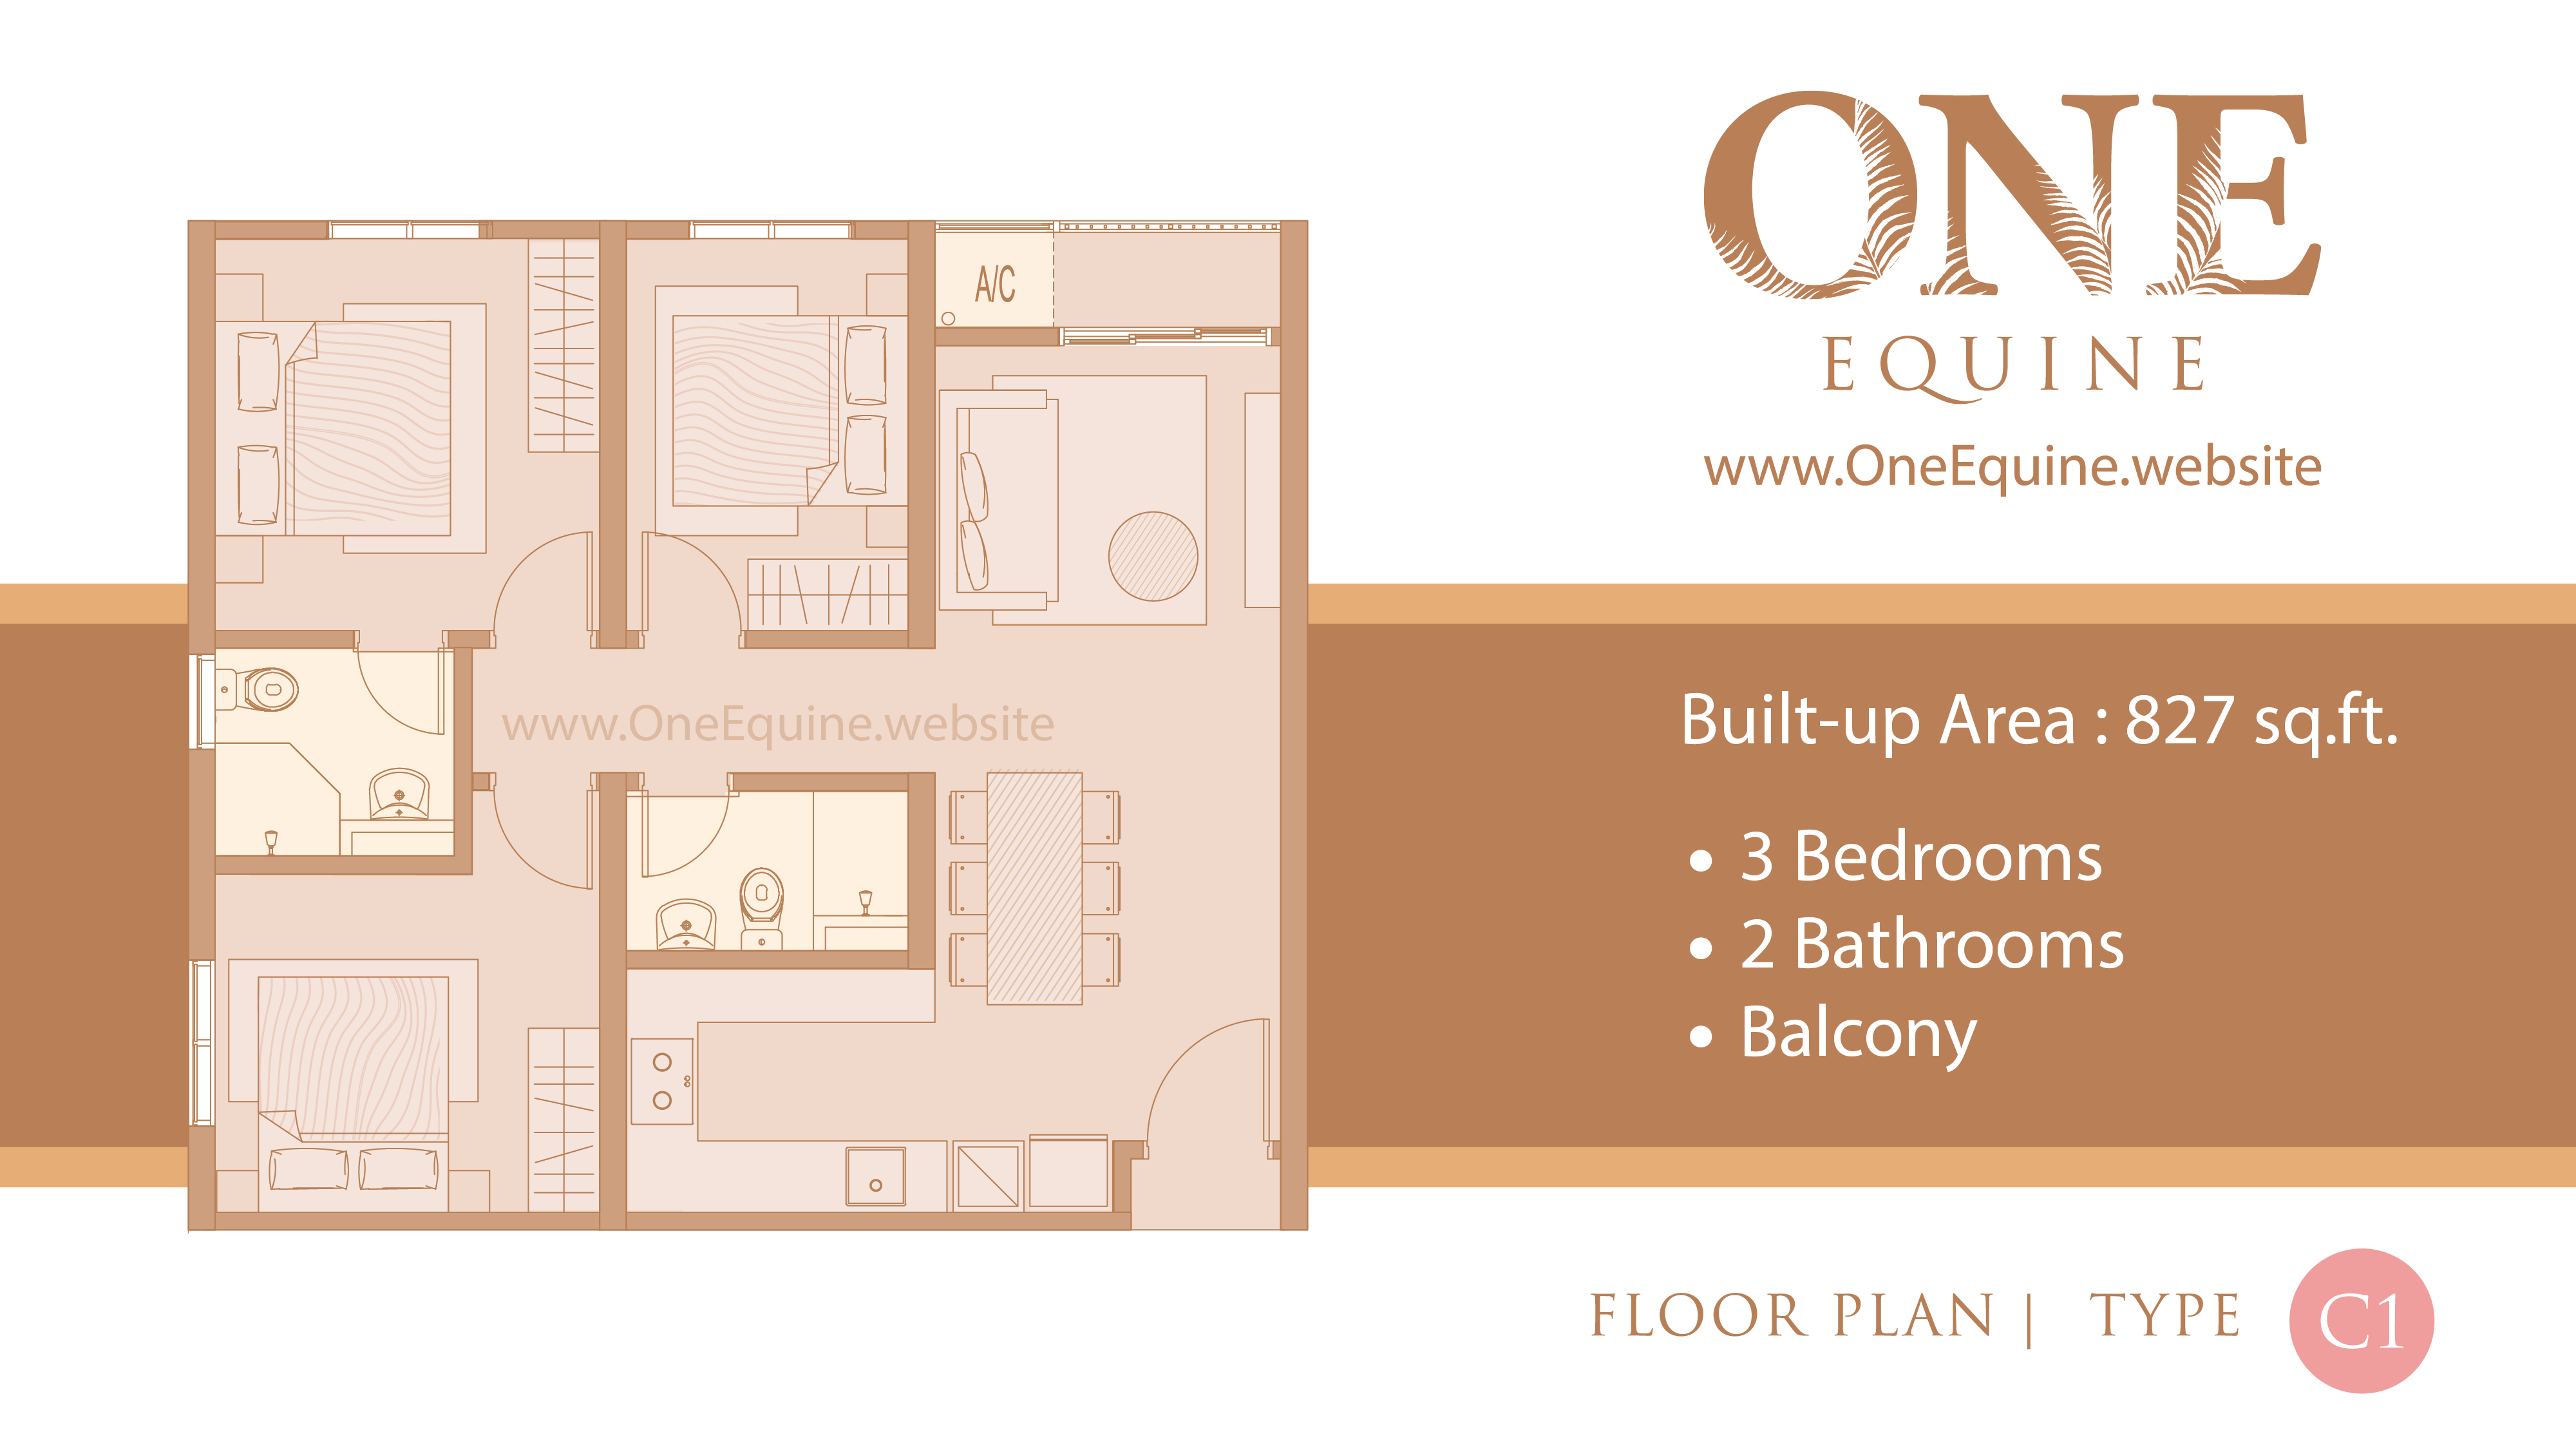 One Equine Park Seri Kembangan - Serviced Apartment 3 Bedrooms 2 Bathrooms Balcony - Floor Plan Type C1 - 827 sqft